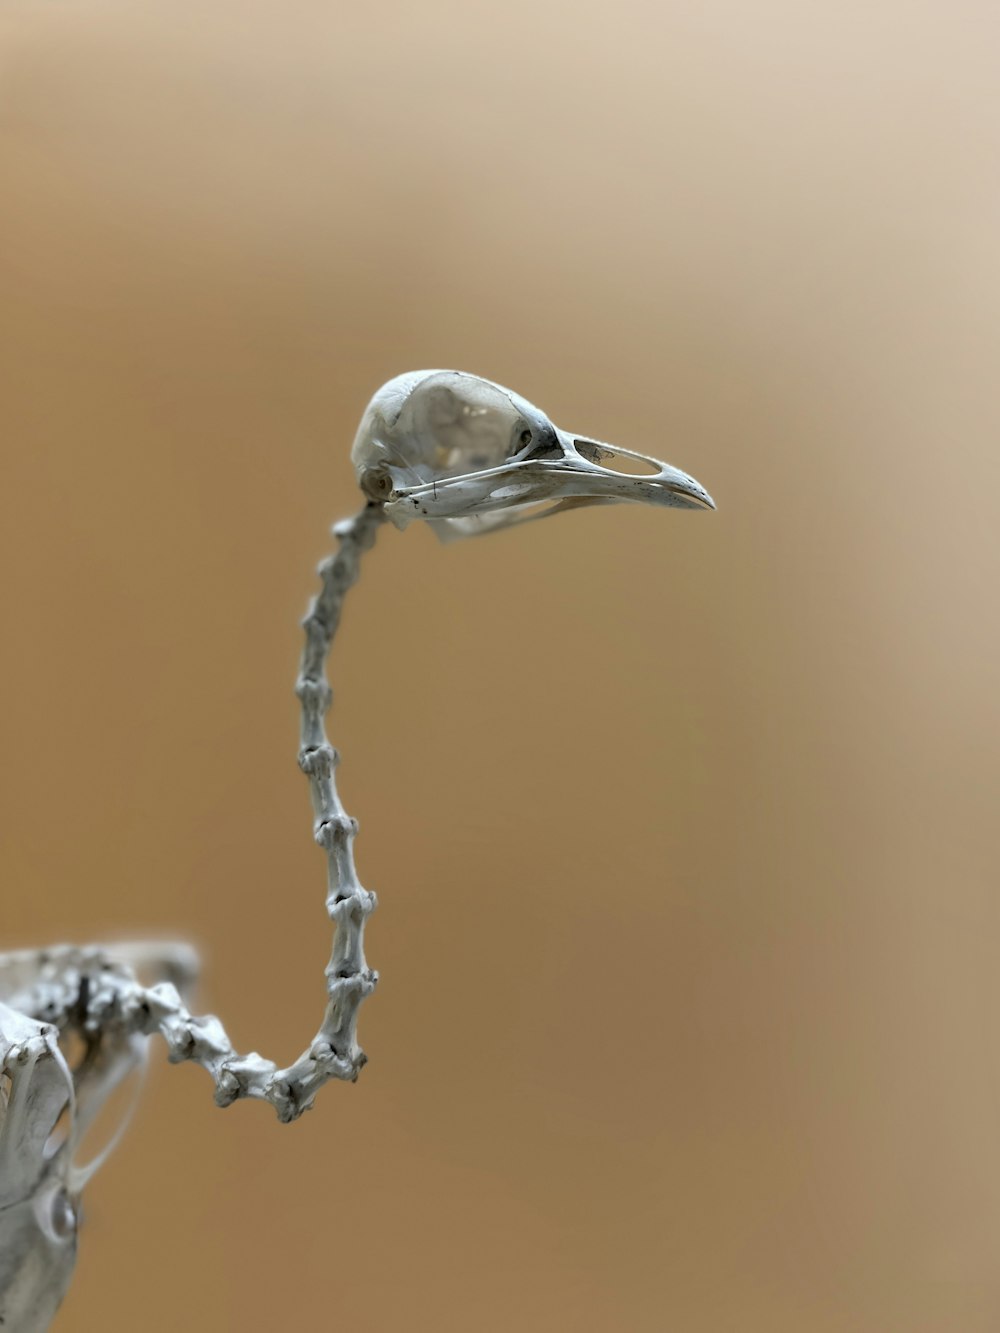 a close up of a bird on a branch